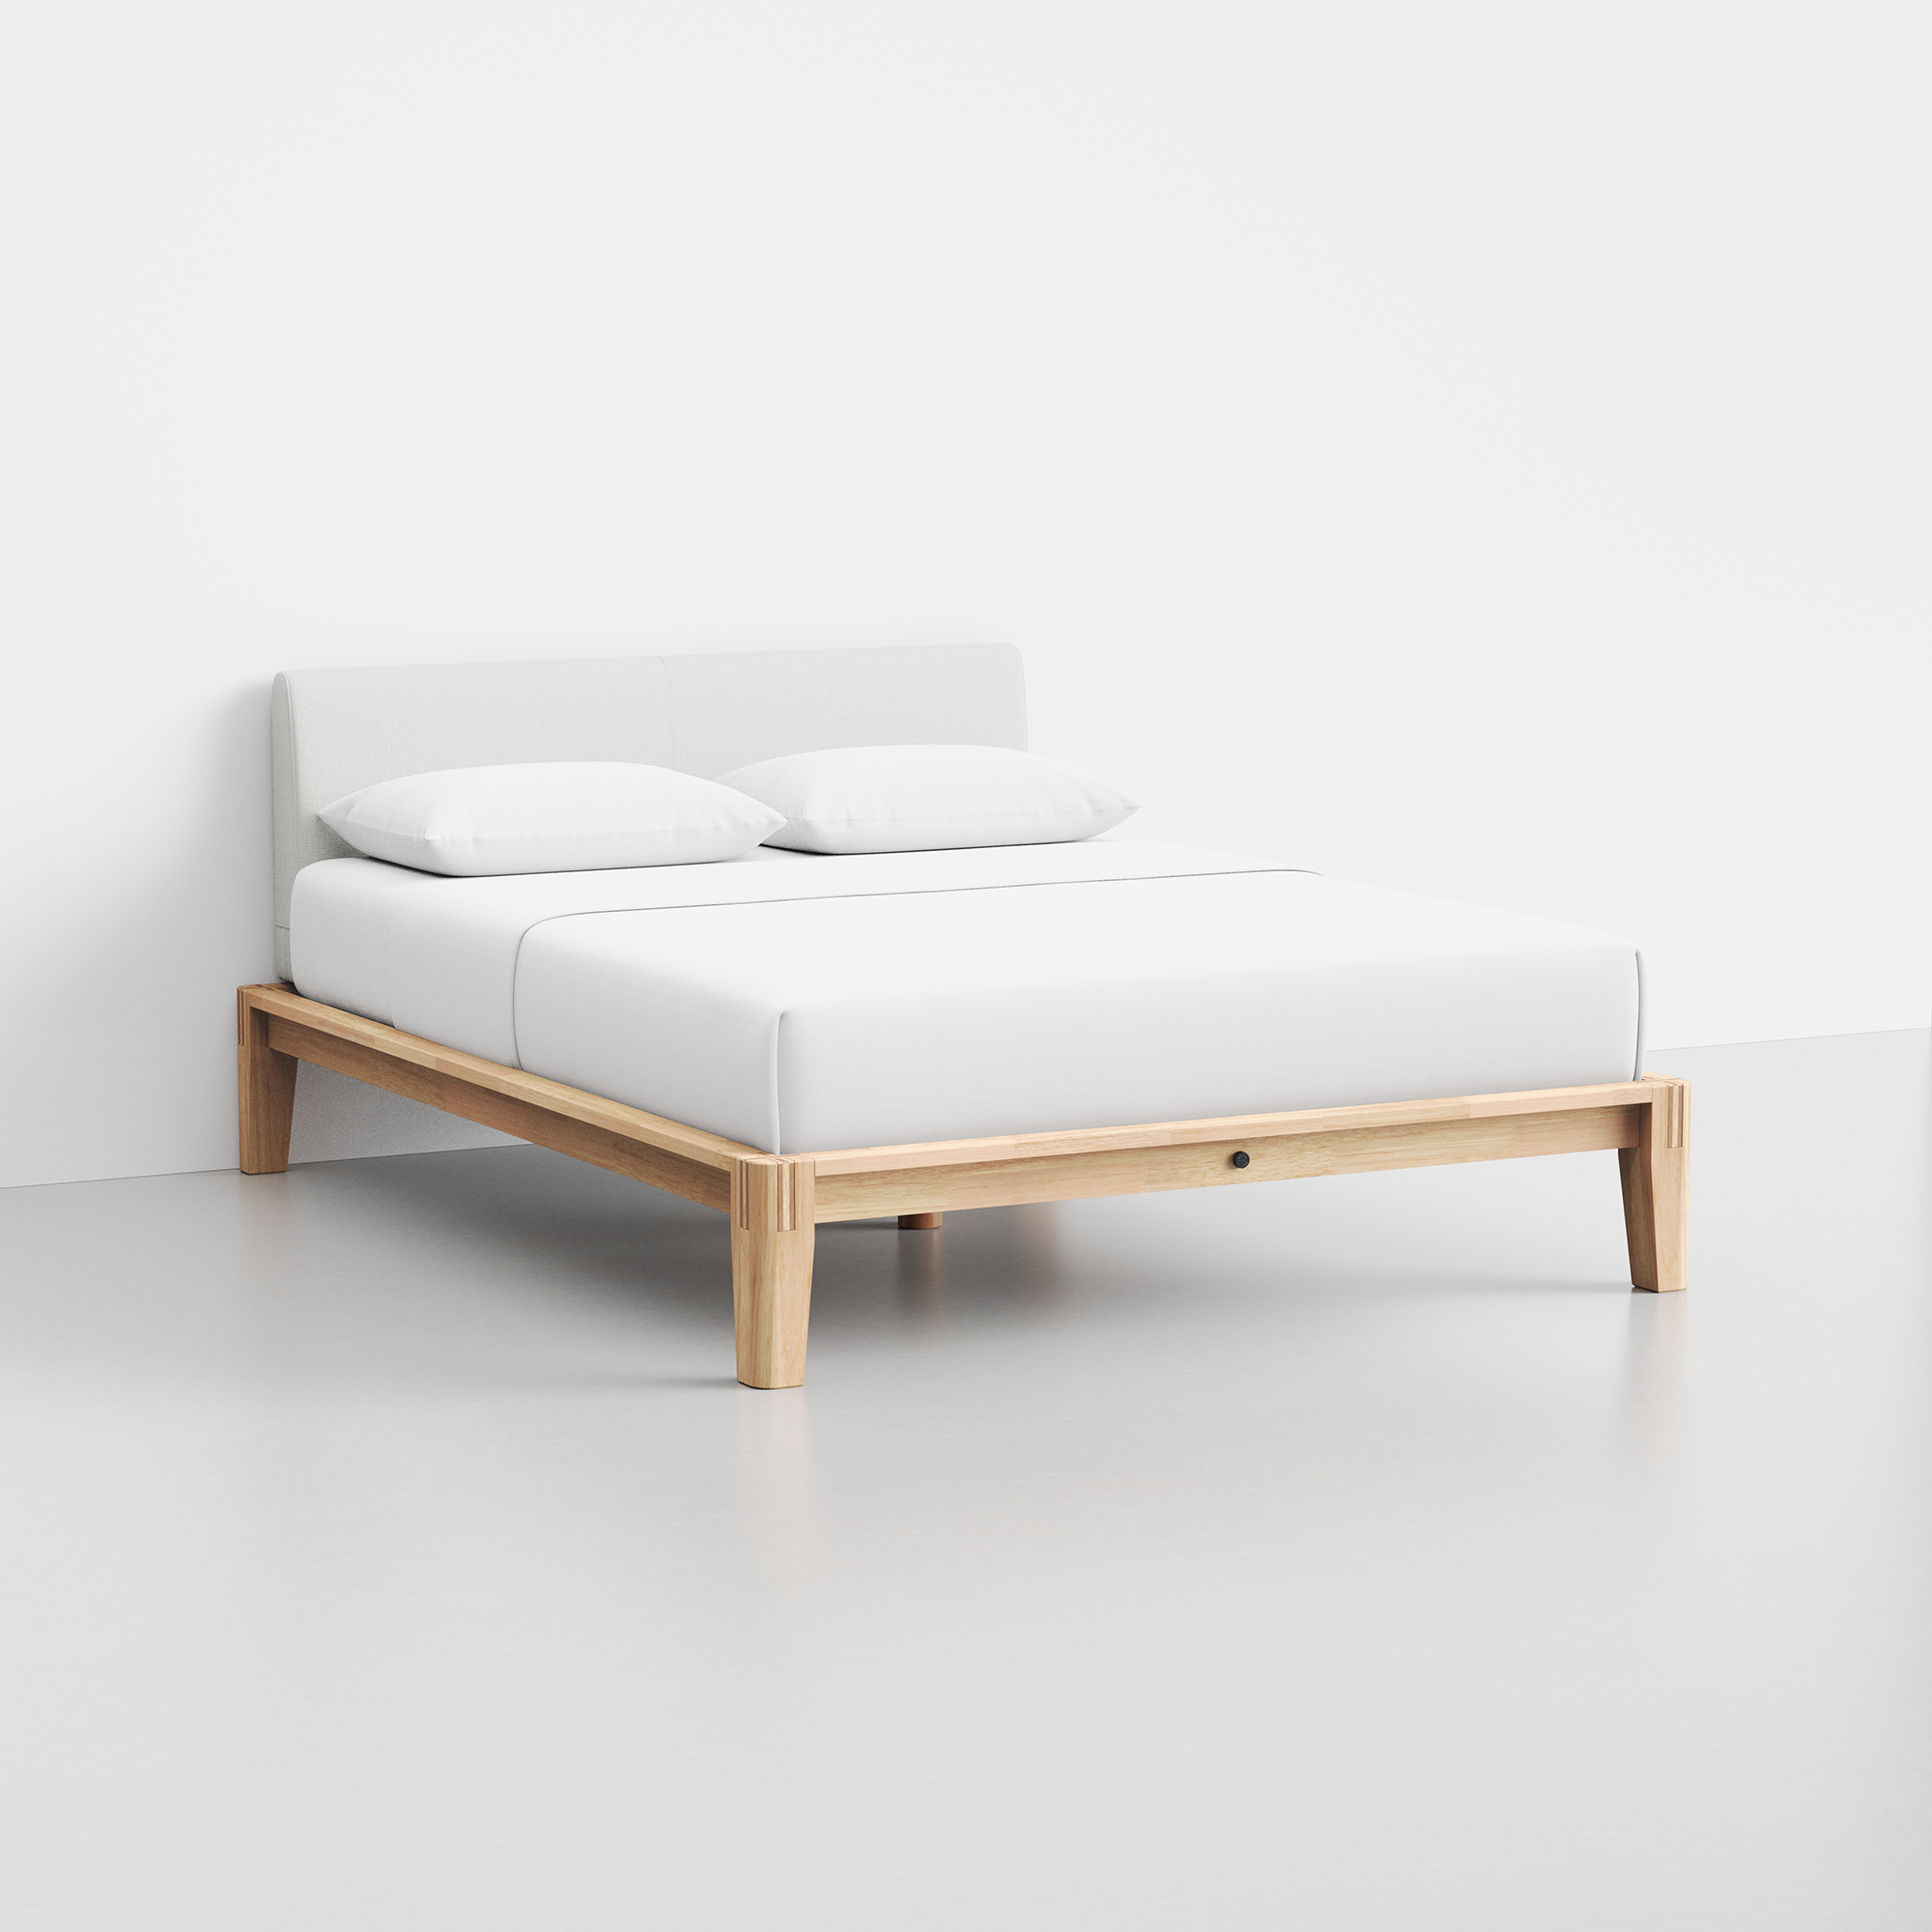 The Bed (Natural / Light Linen) - Render - Angled